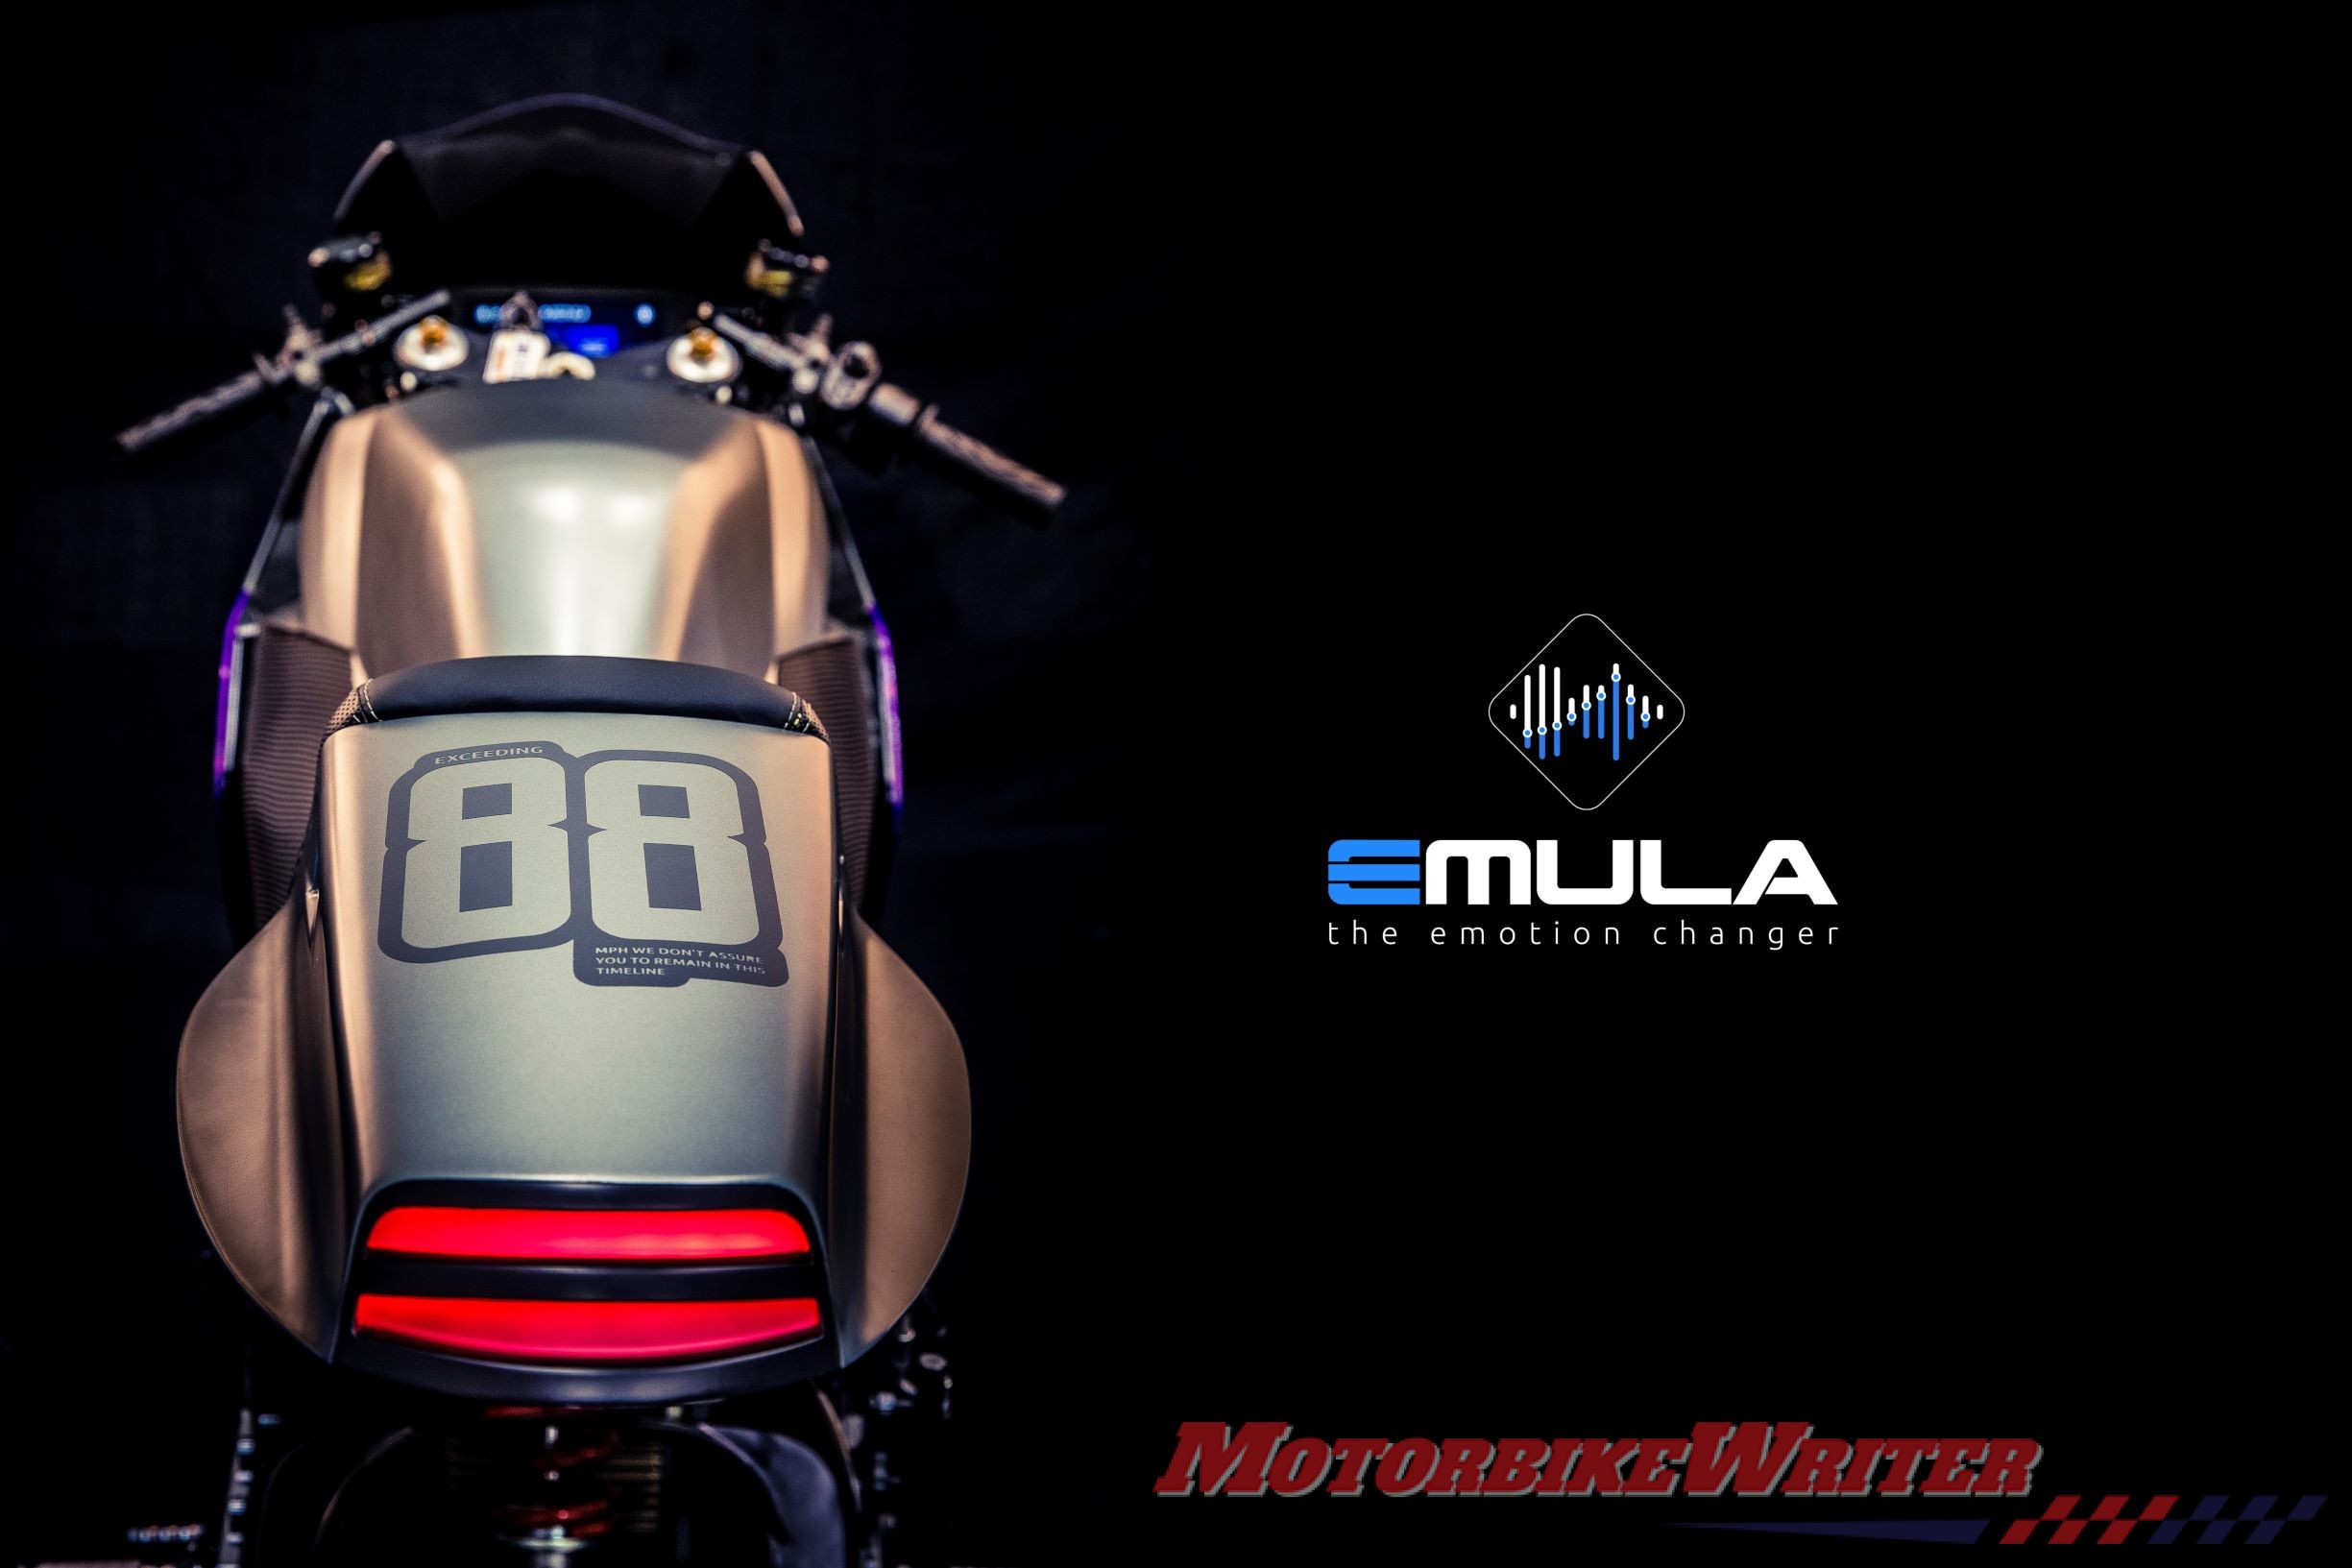 Emula wll emulate traditional motorcycles